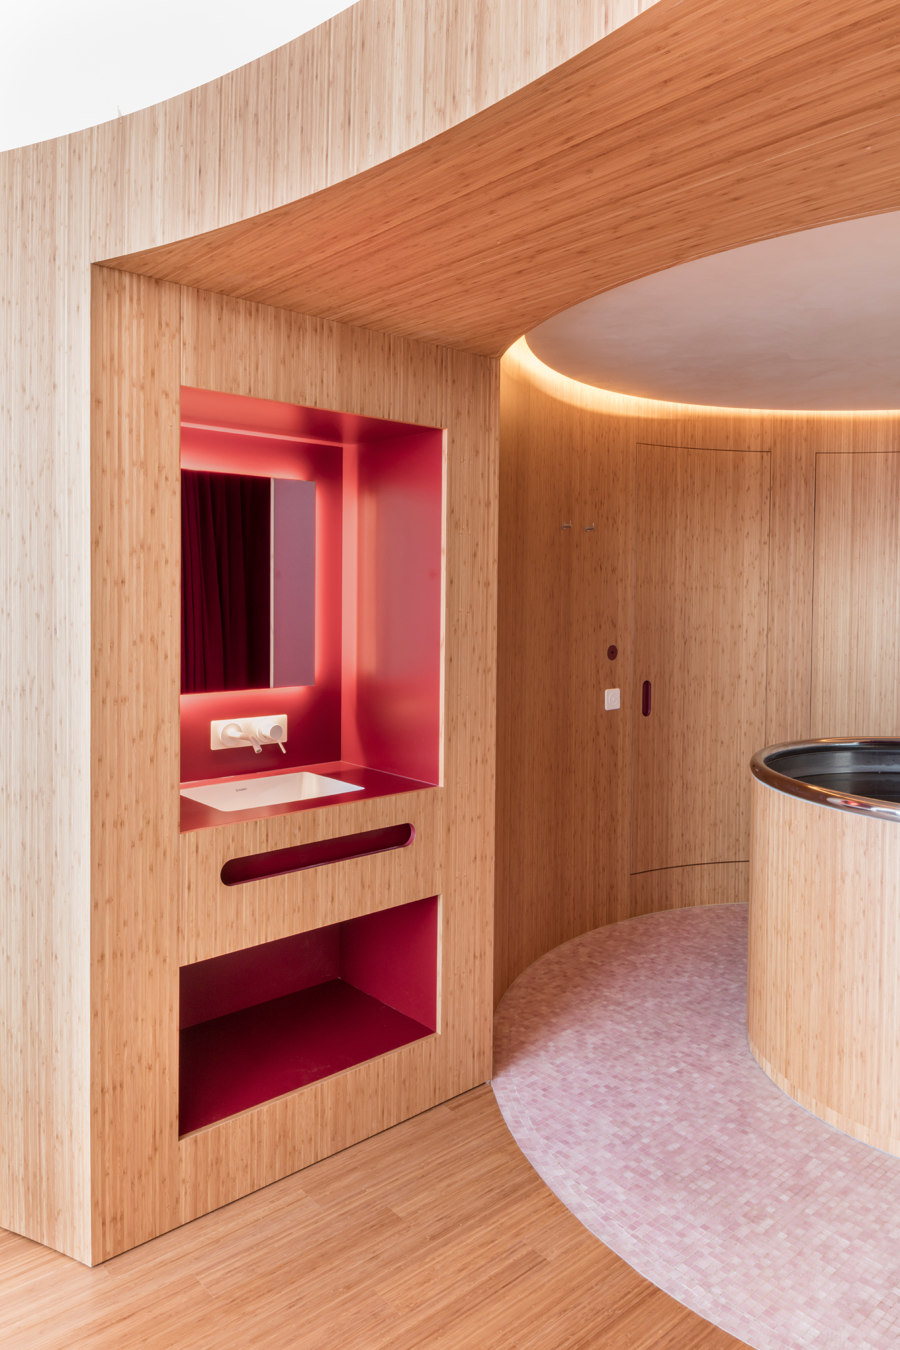 Whitepod Zen Suite de Montalba Architects | Hoteles